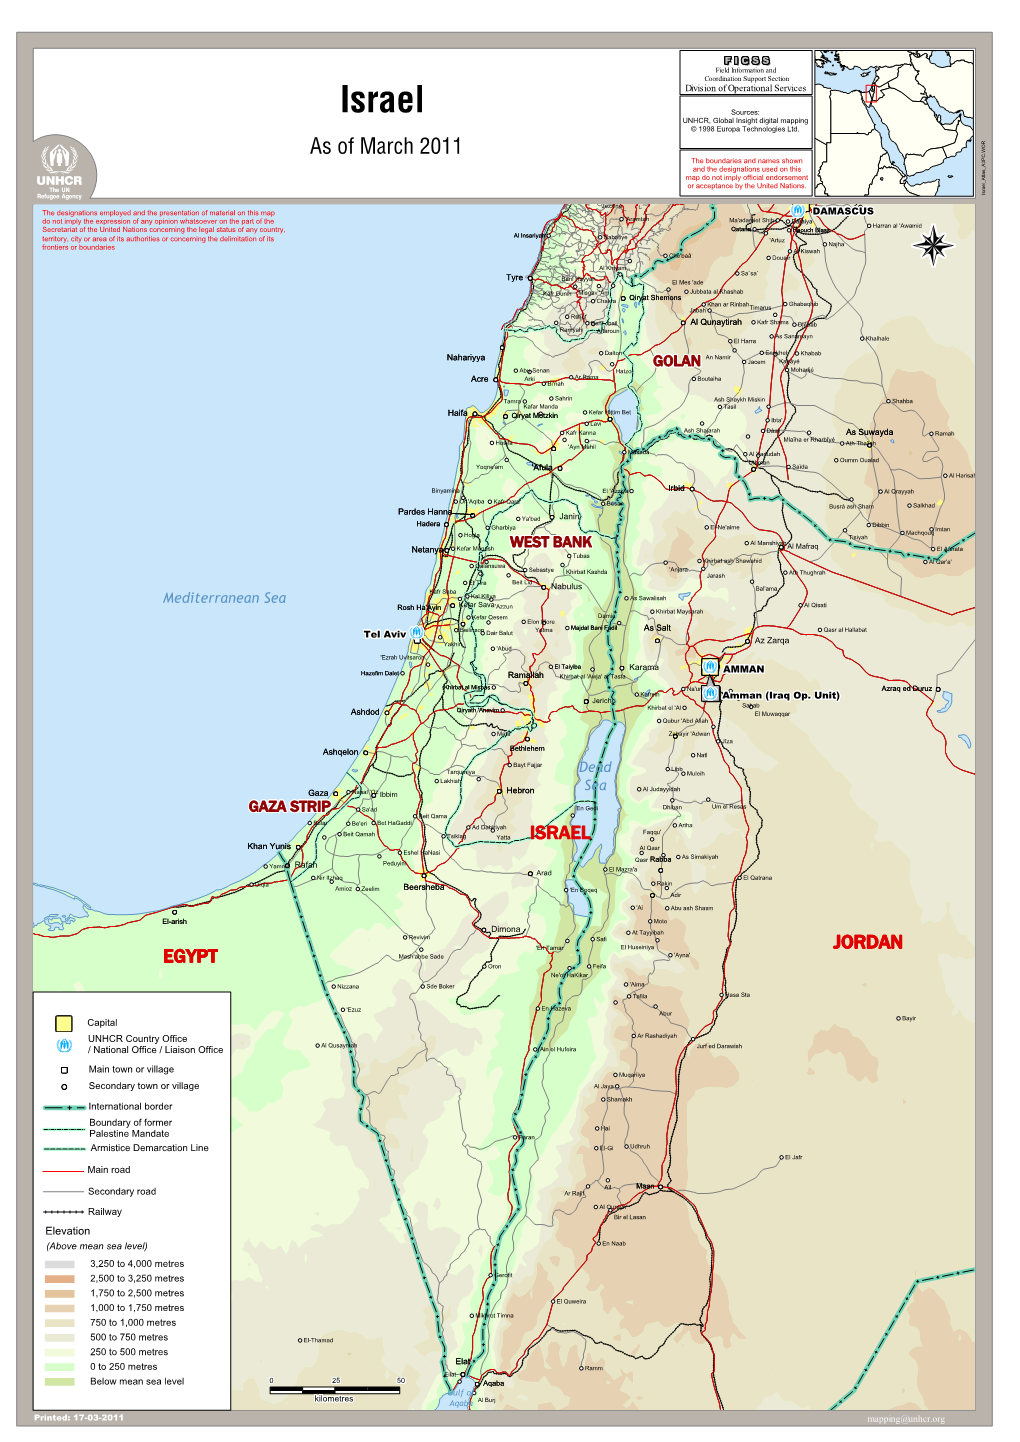 Israel Sources: UNHCR, Global Insight Digital Mapping © 1998 Europa Technologies Ltd